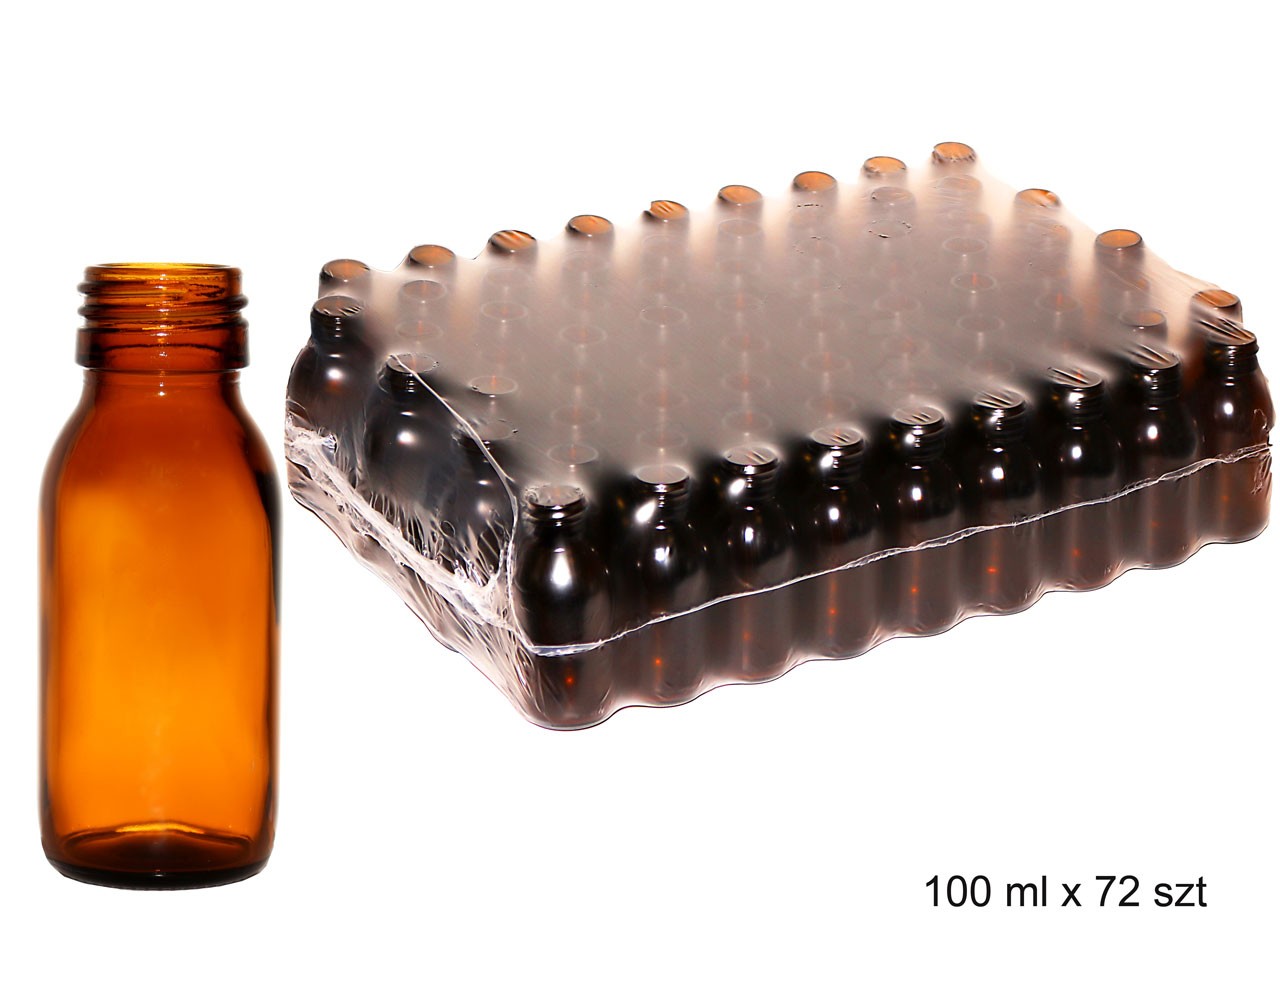 butelka-farmaceutyczna-100-x72--sztnpsd-MIN.jpg